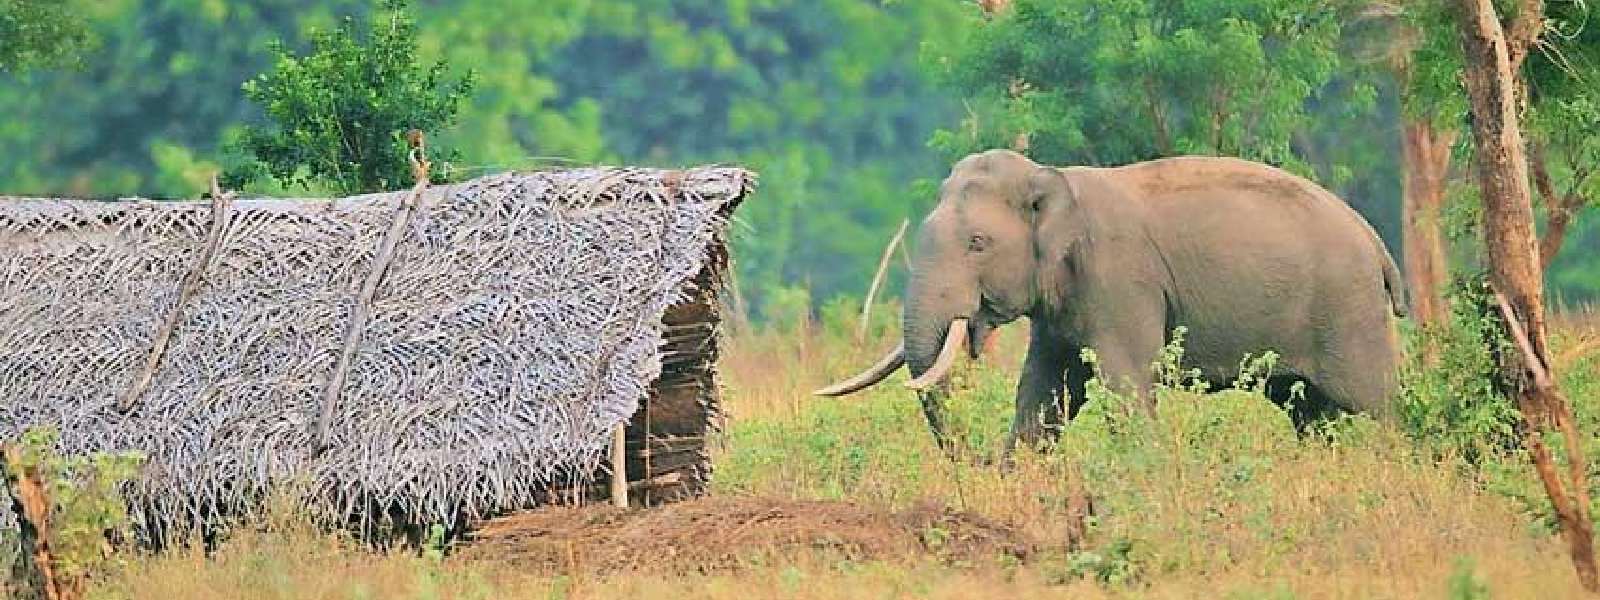 Struggle to survive kills humans, elephants in rural Sri Lanka